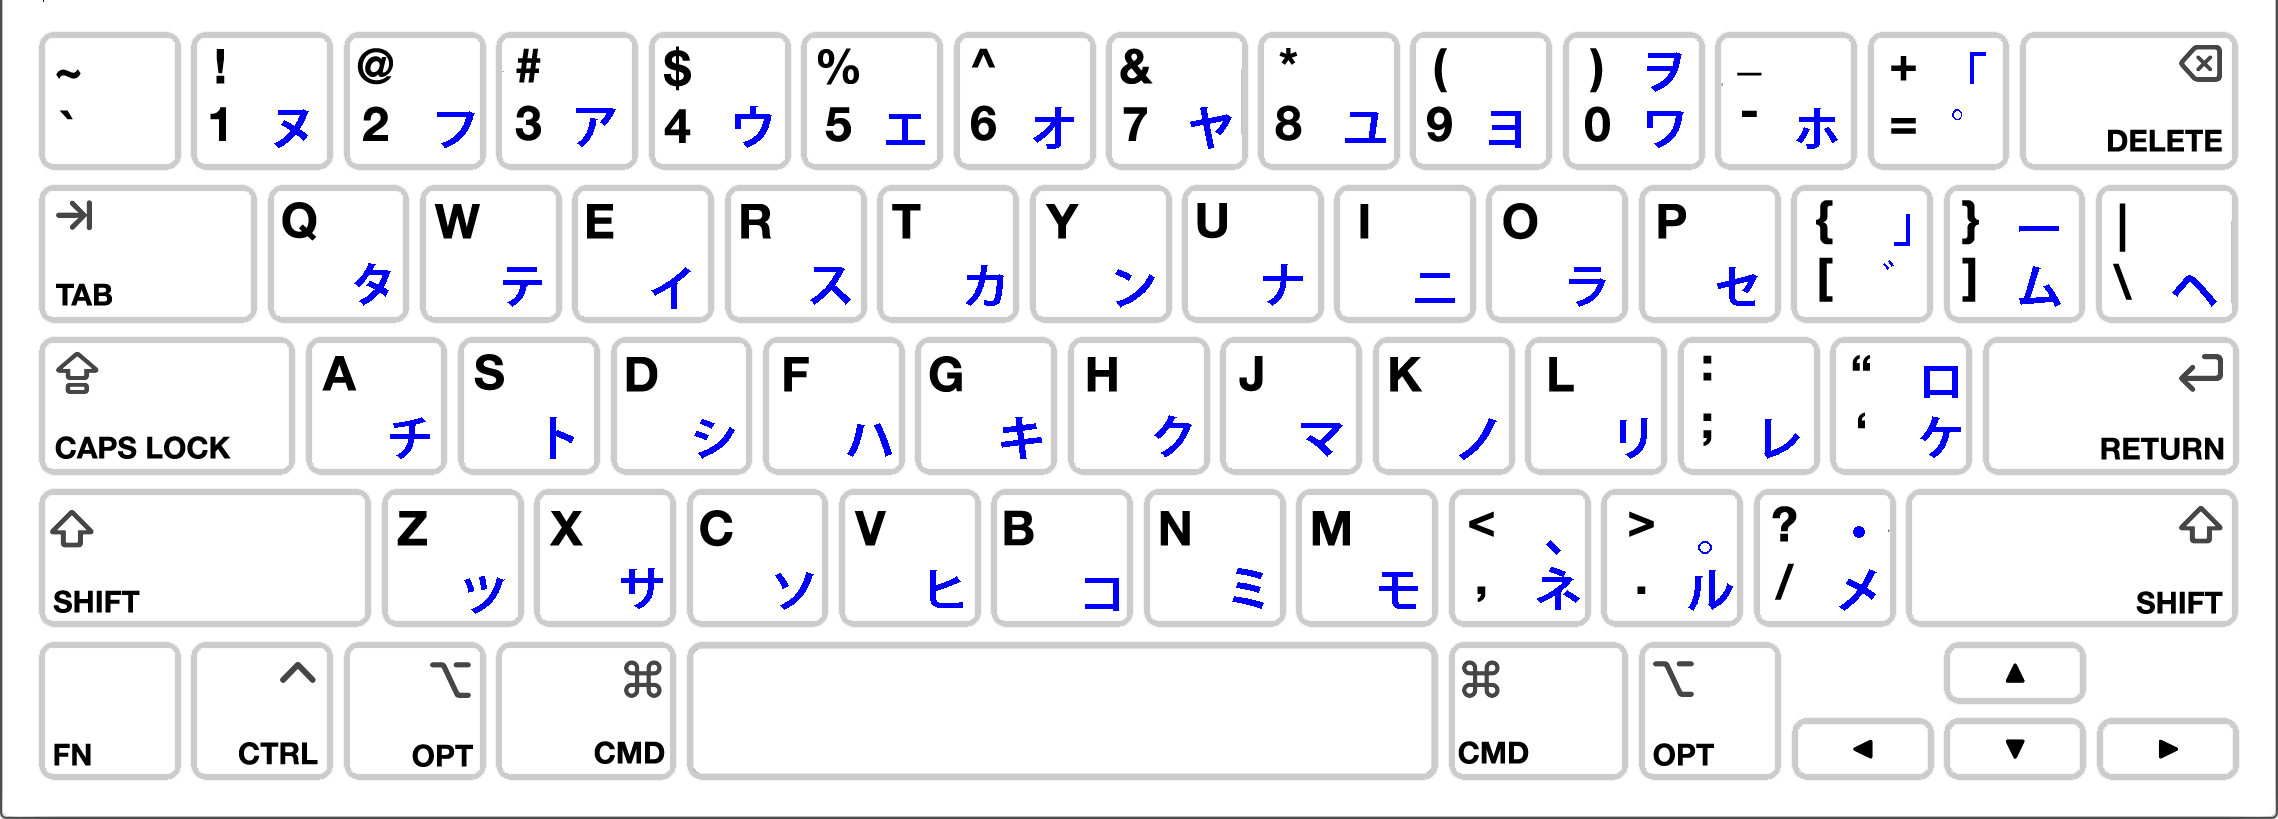 Japanese Kana katakana Keyboard Layout